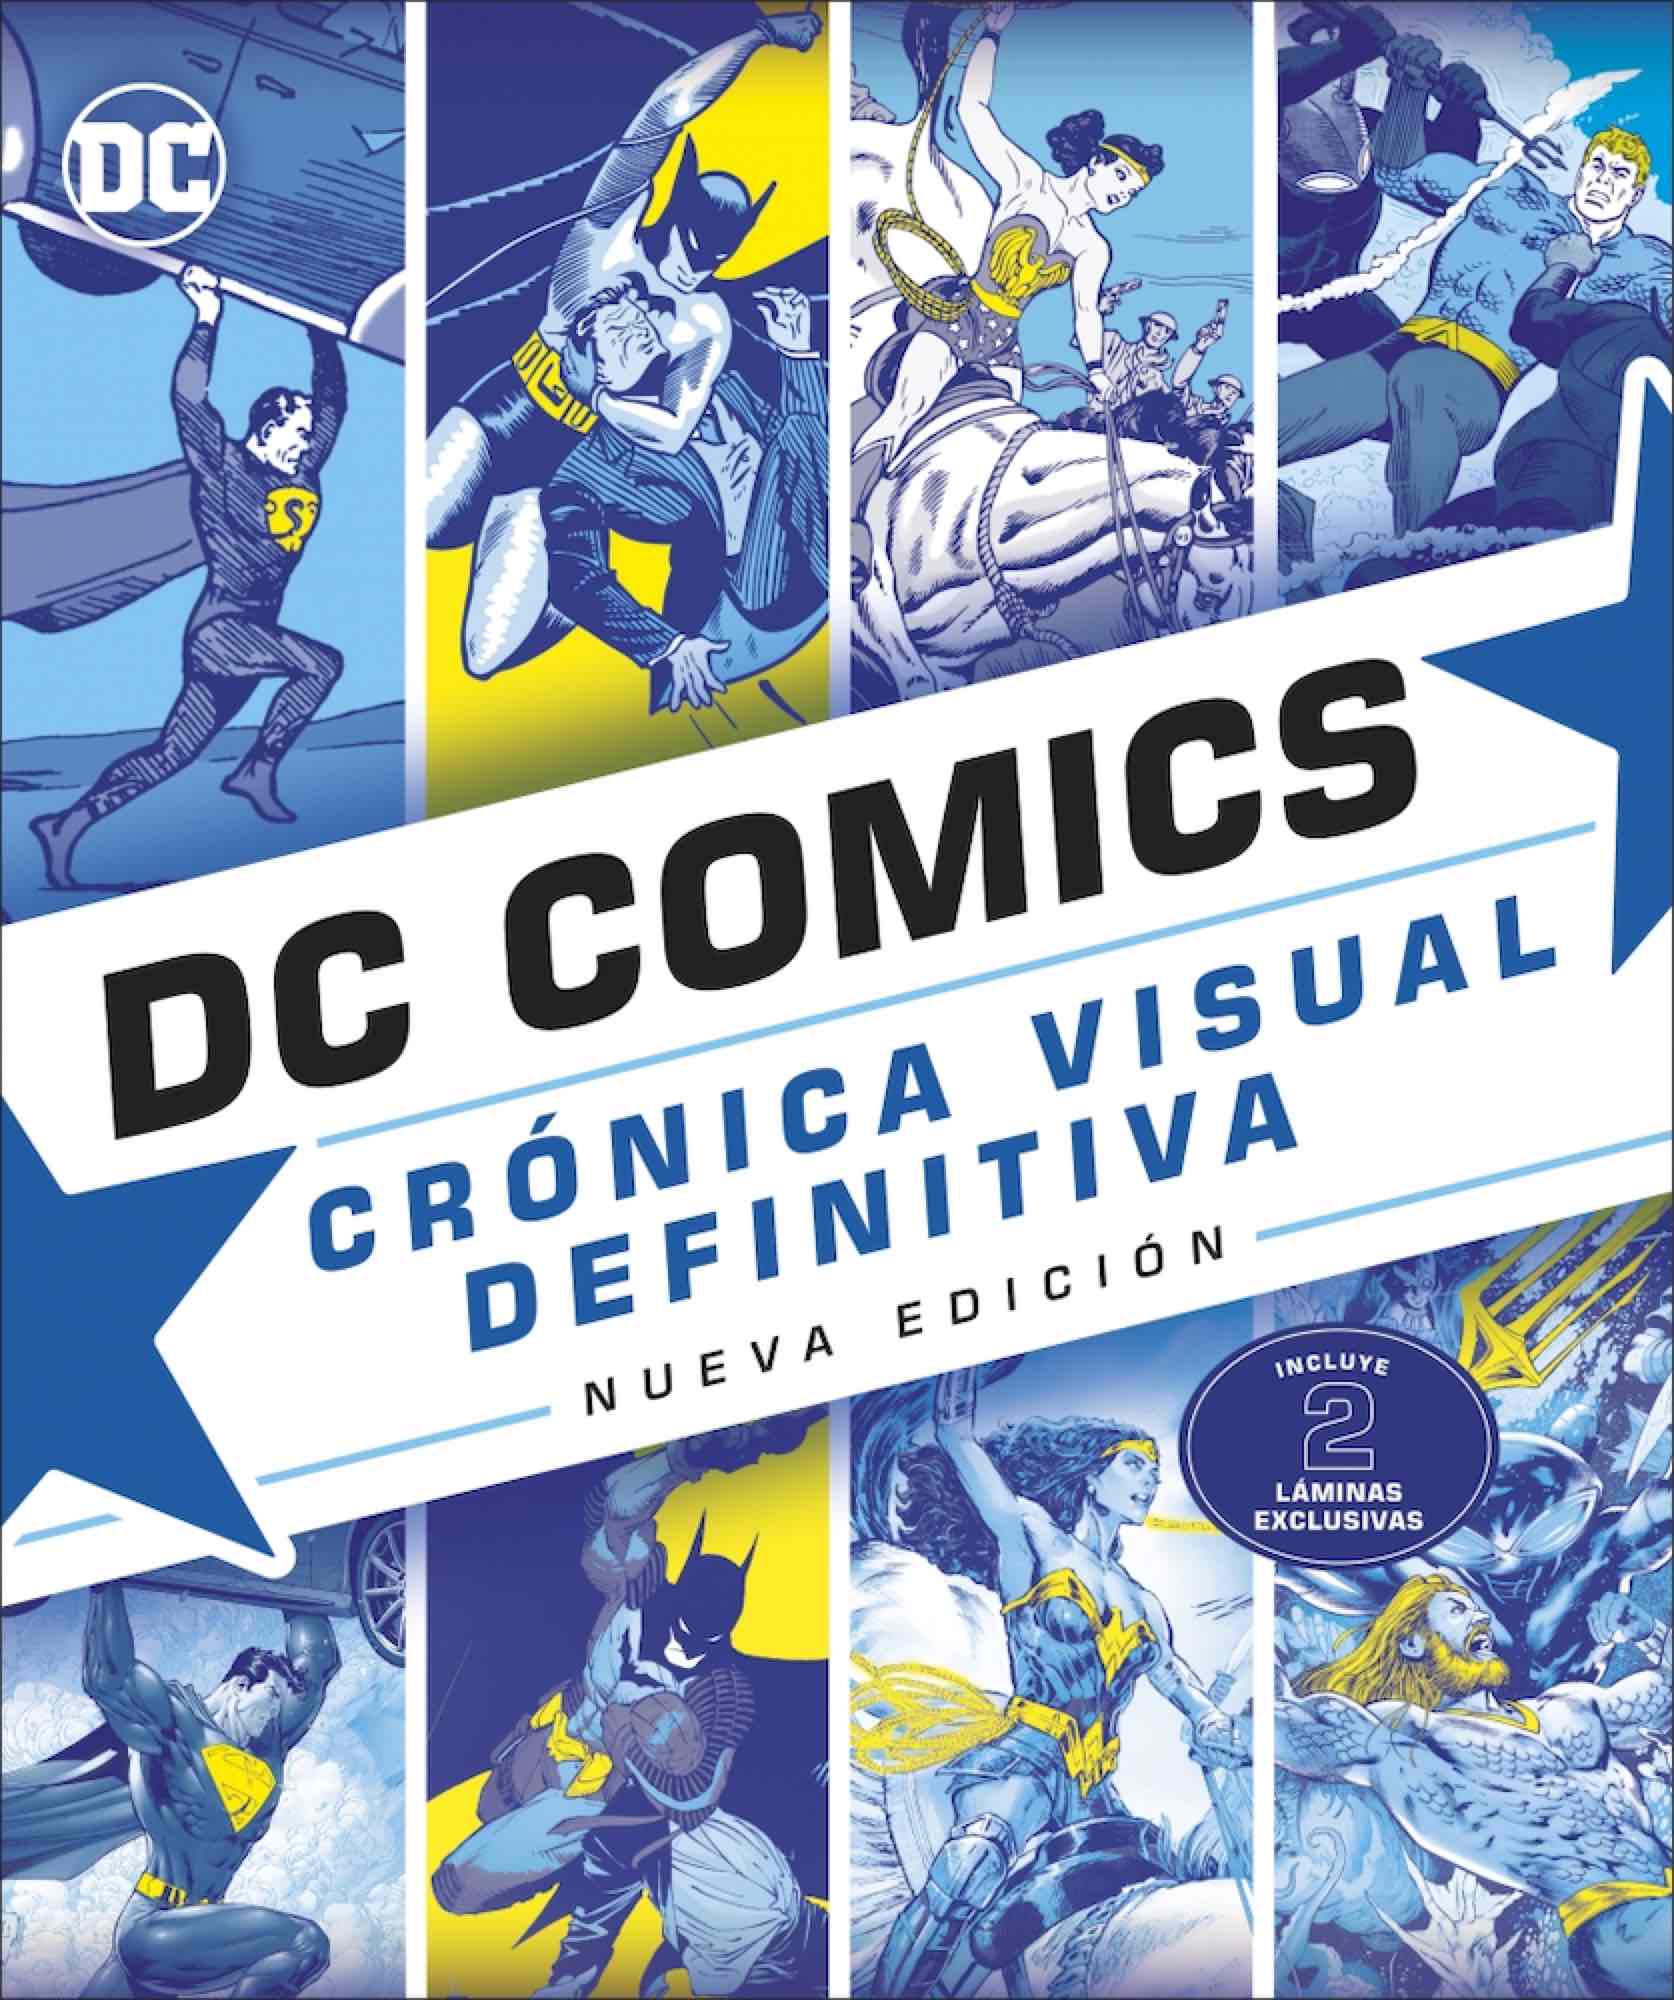 DC COMICS. CRONICA VISUAL DEFINITIVA (NUEVA EDICION)